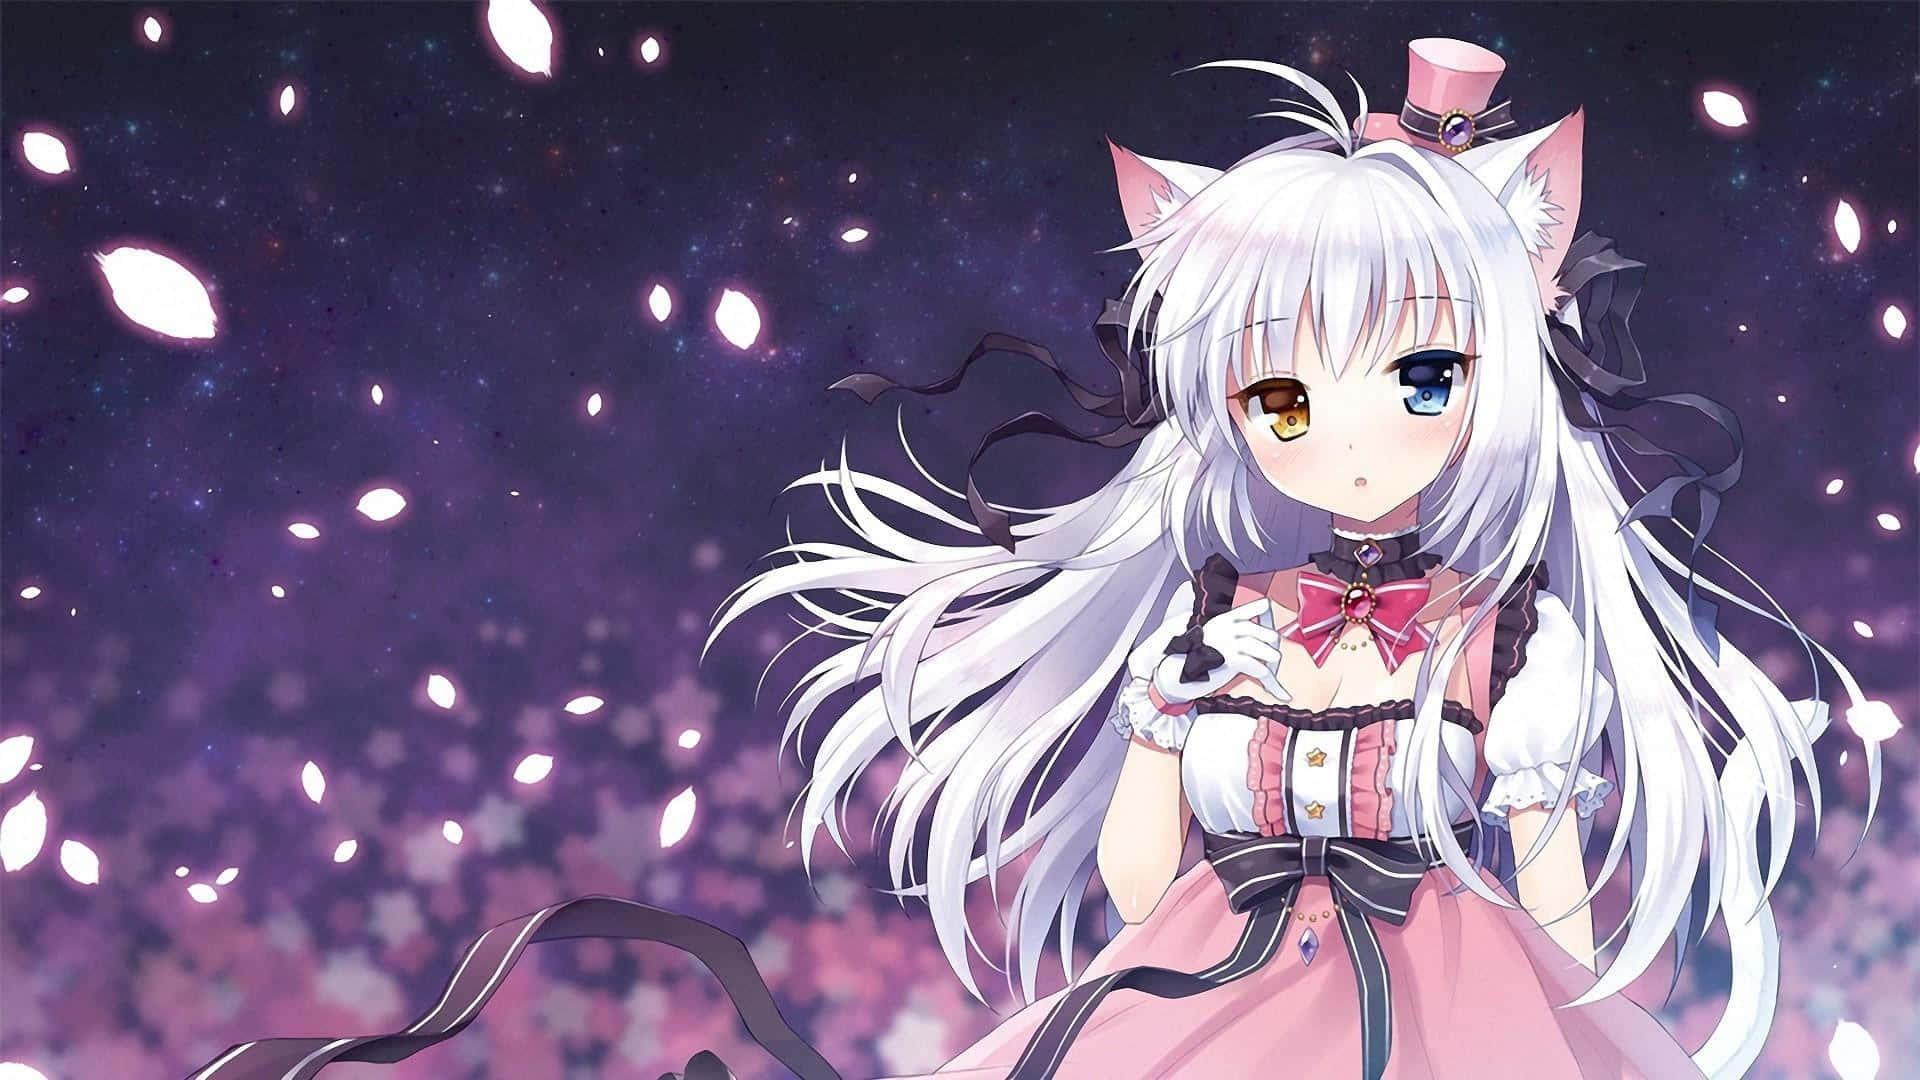 Anime Neko Girl Starry Background